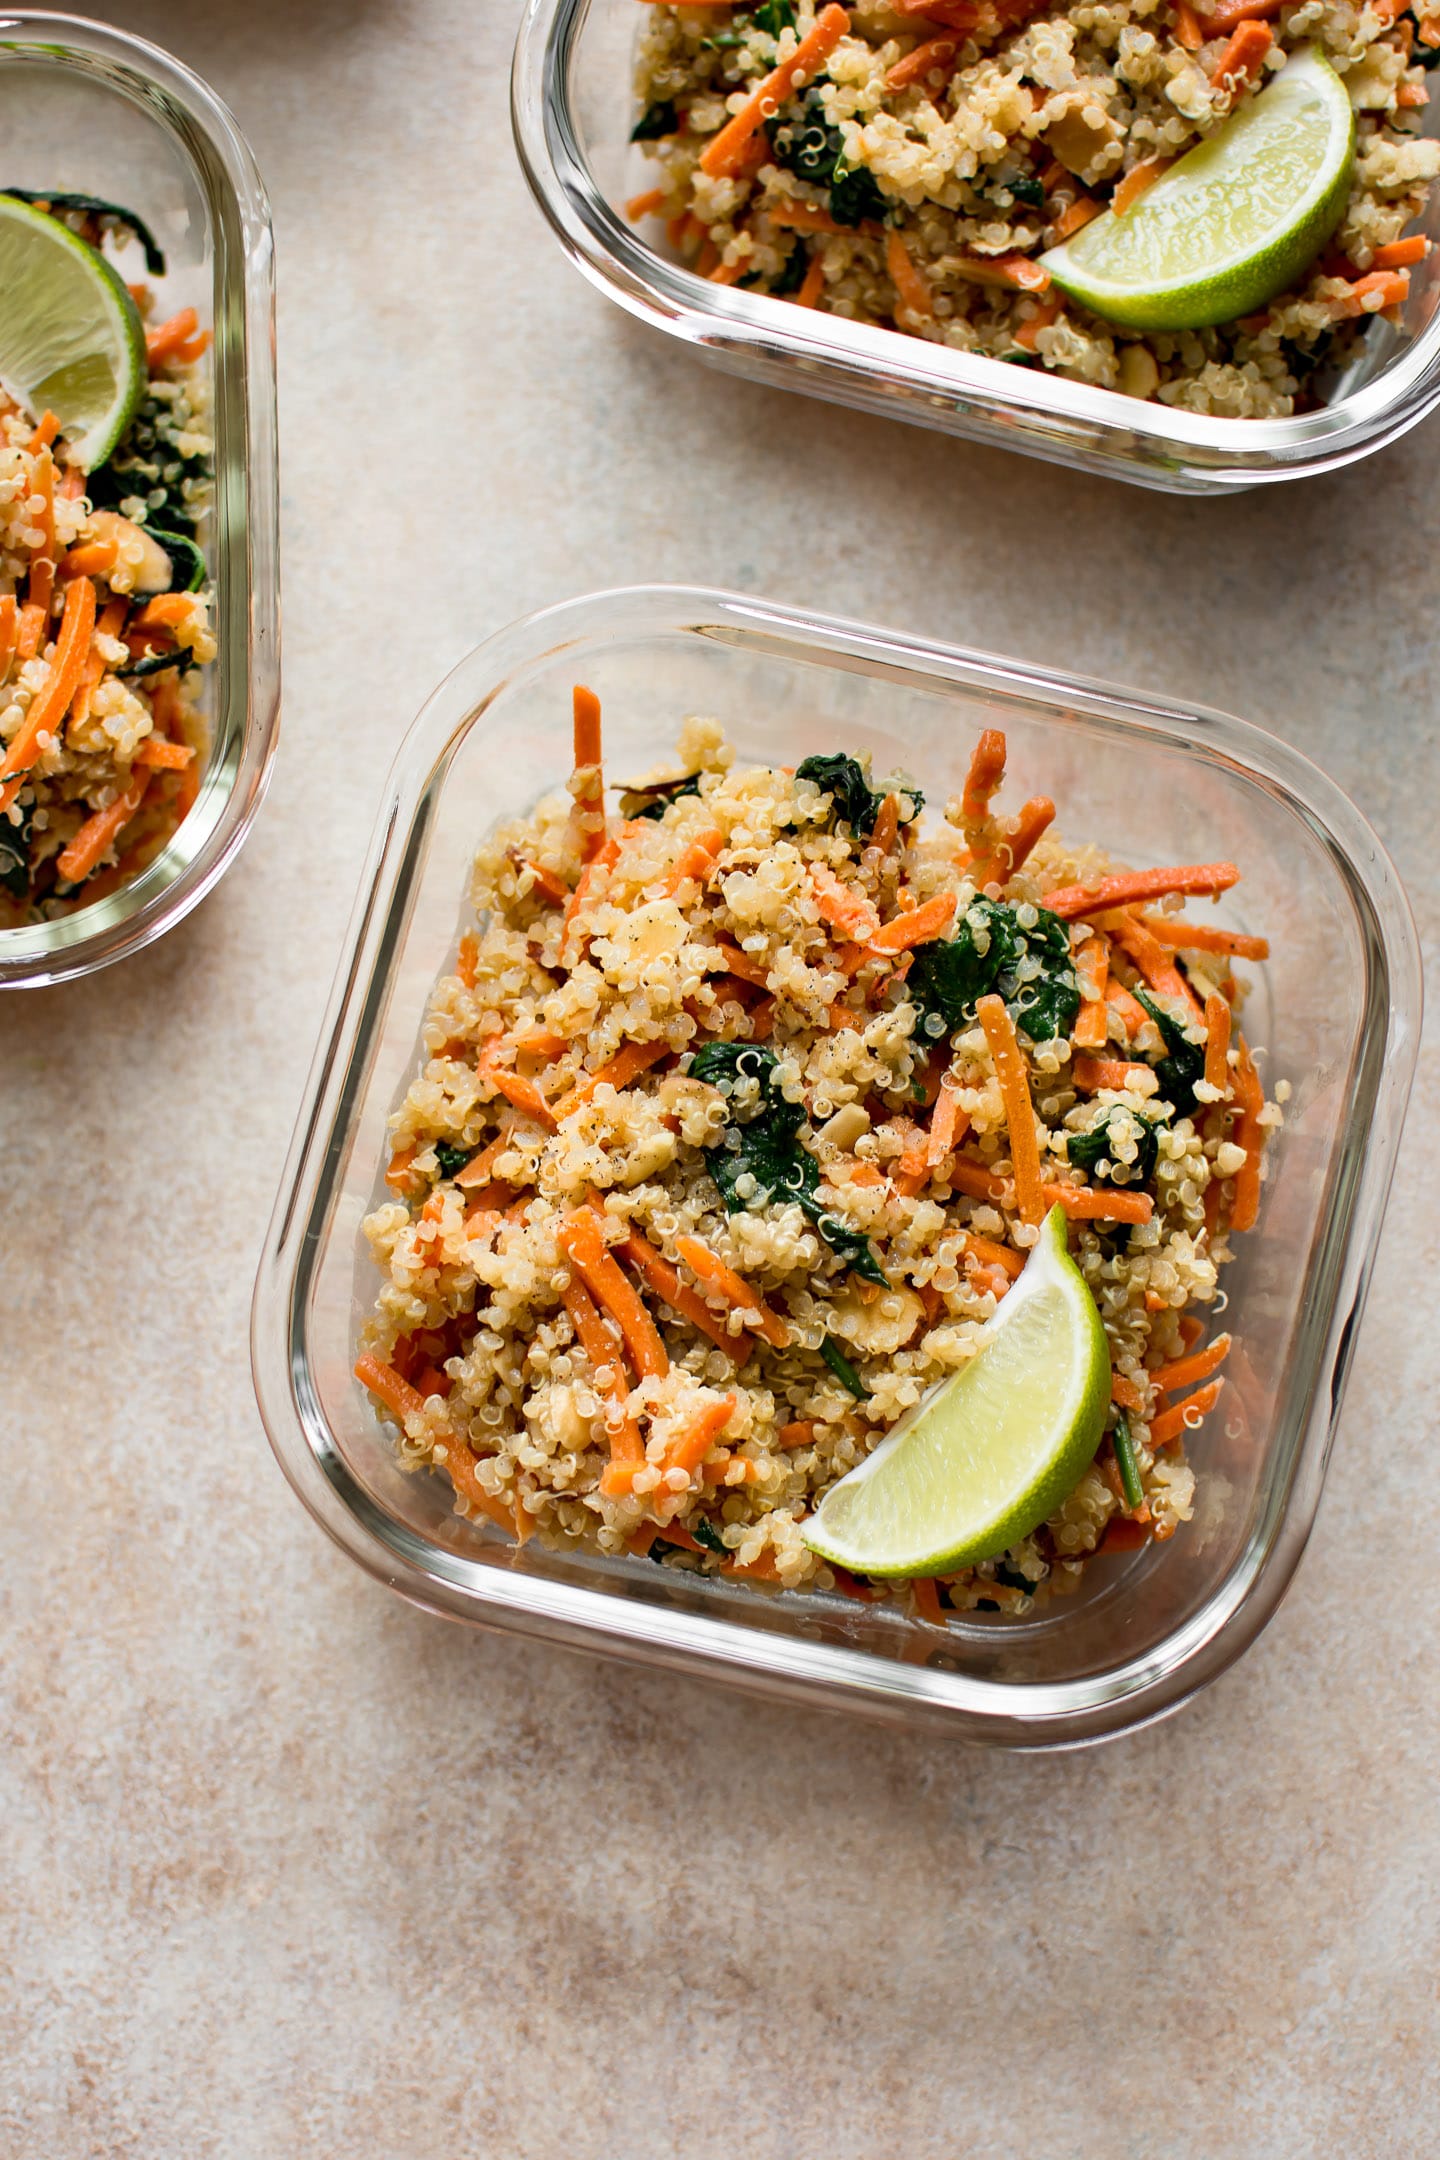 Spinach and Quinoa Vegan Meal Prep Bowls • Salt & Lavender